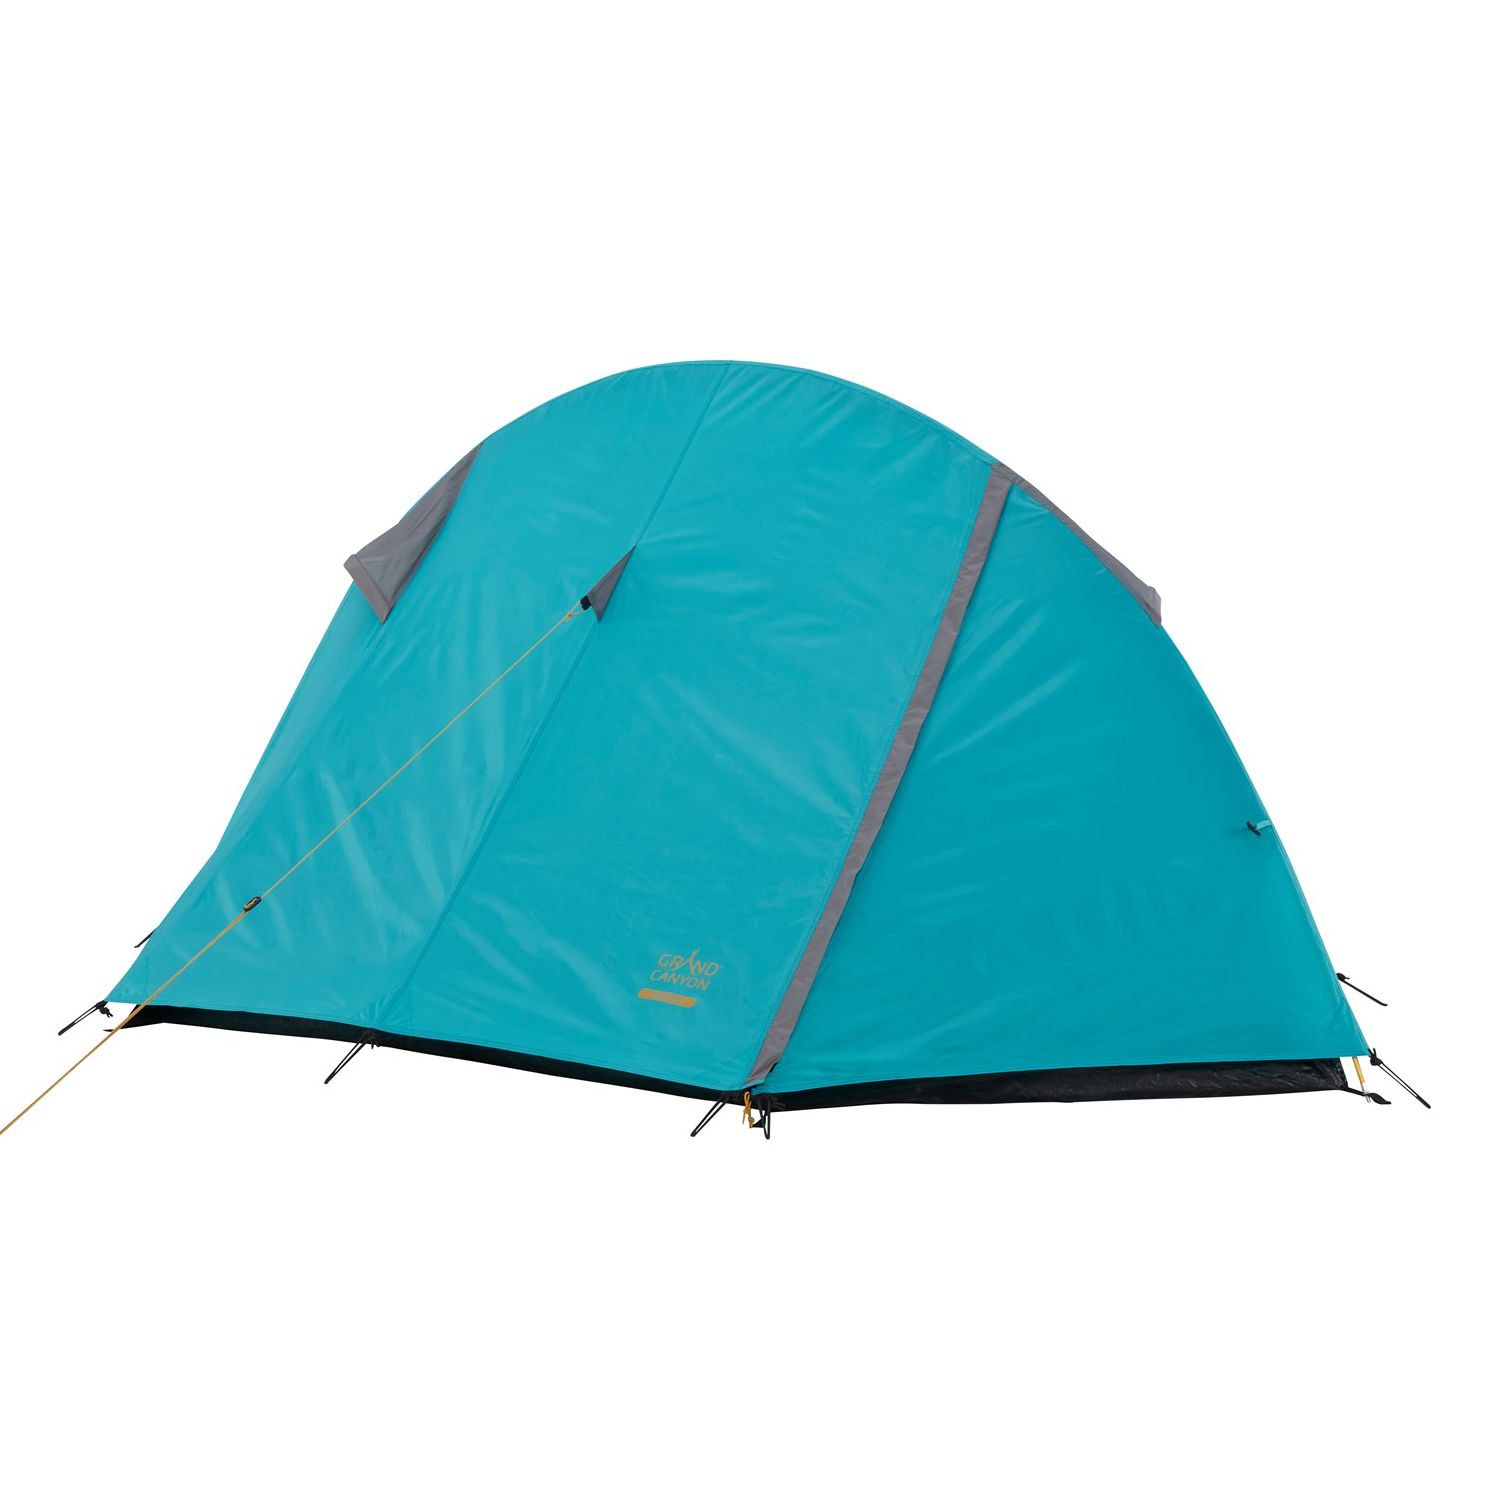 Tent CARDOVA 1 BLUE GRASS GRAND CANYON 330003 L-11